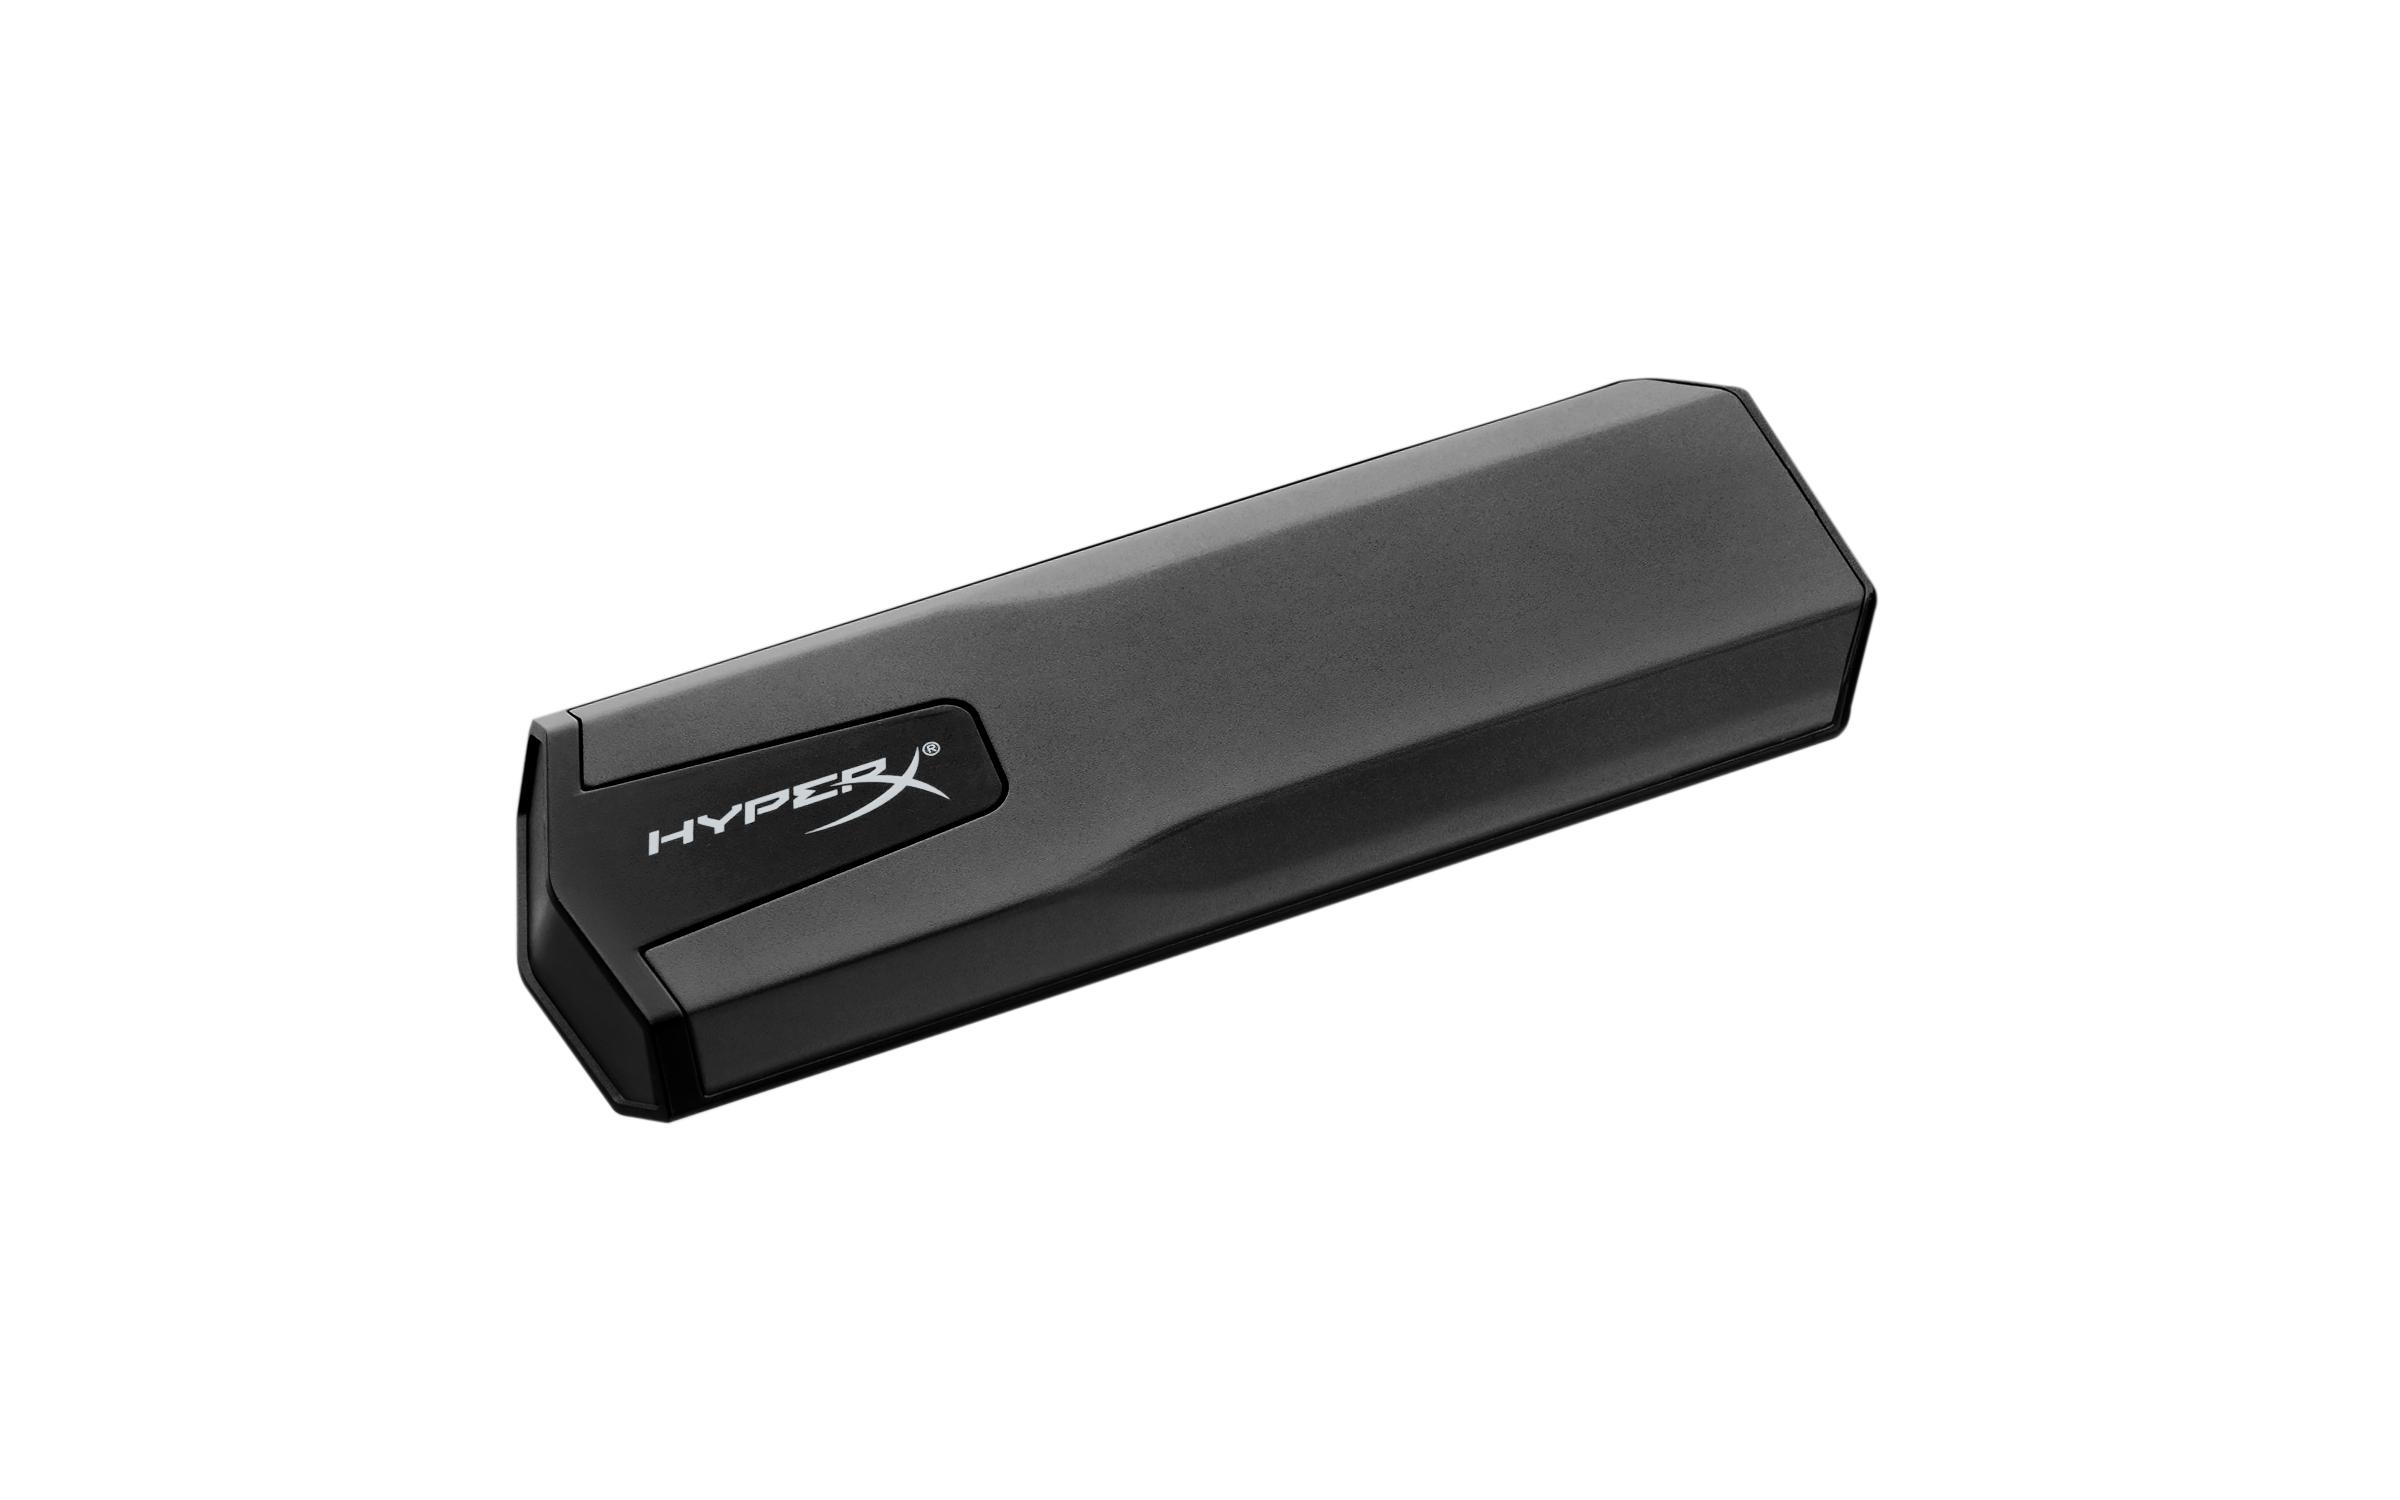 Външен Solid State Drive (SSD) Kingston HyperX Savage EXO 960GB USB 3.1 Gen 2 Type-C